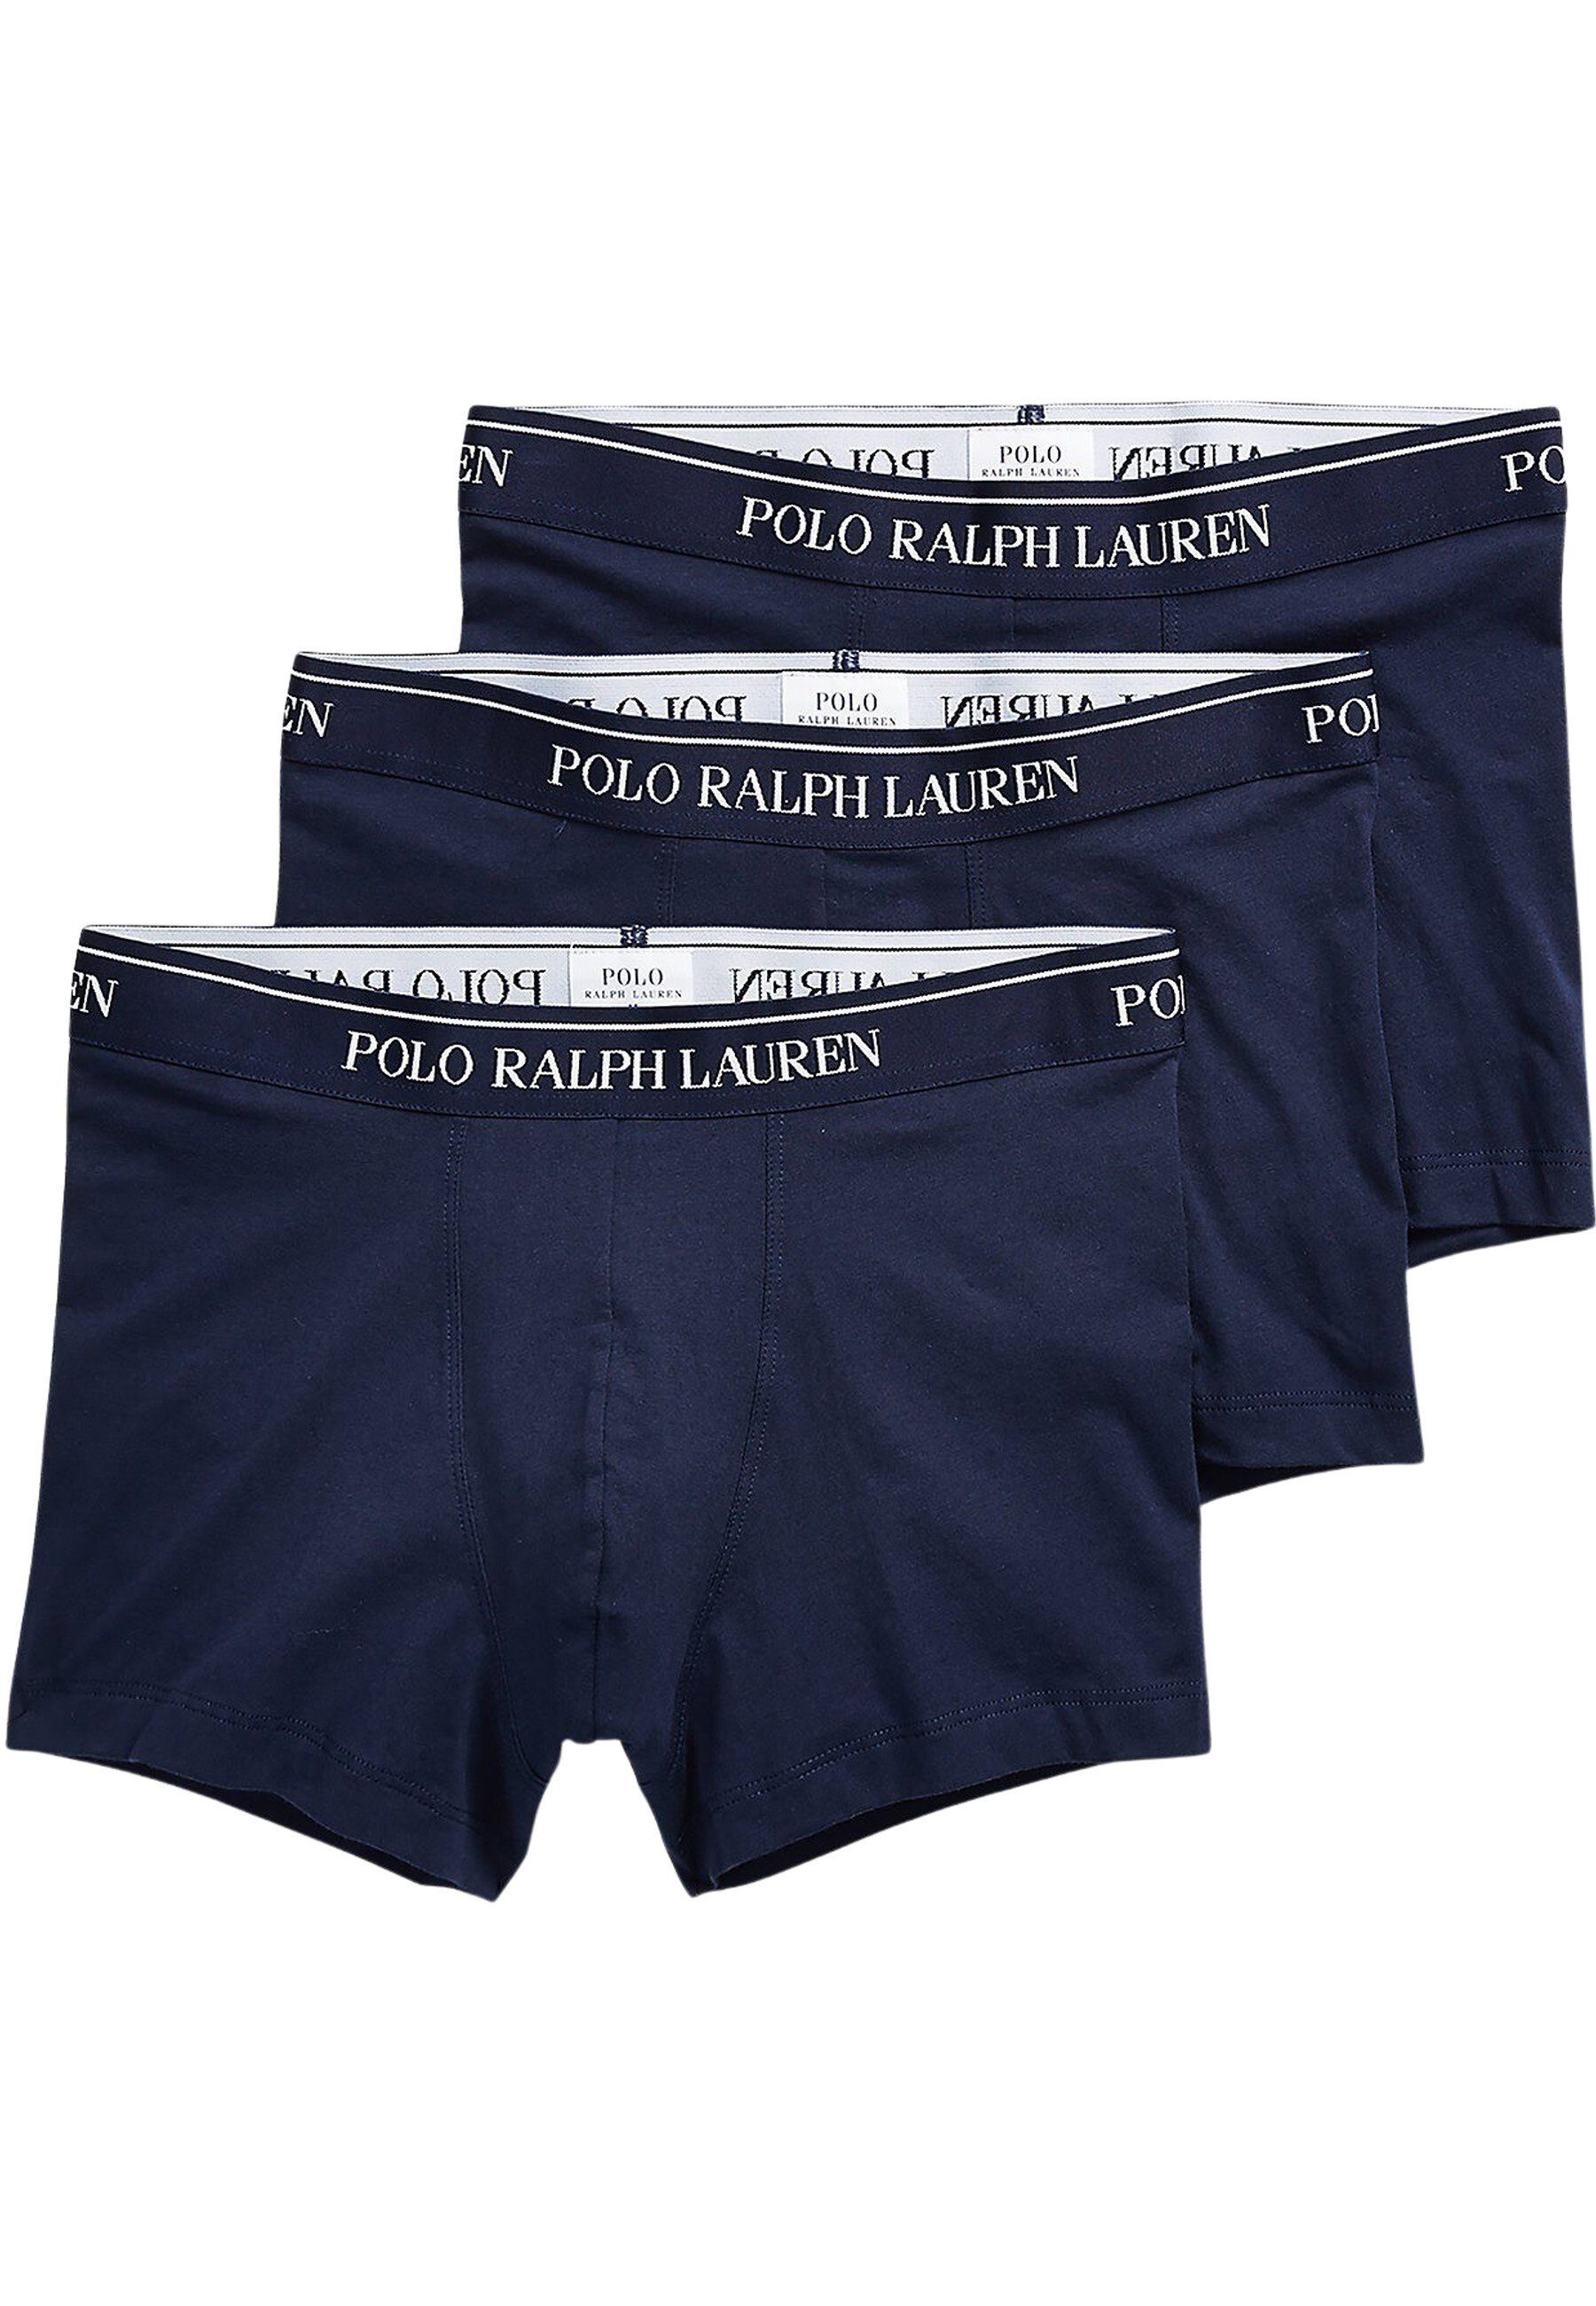 Polo Ralph Lauren Ralph Lauren Boxershorts Boxershorts Basic Trunks Dreierpack (3-St) dunkelblau